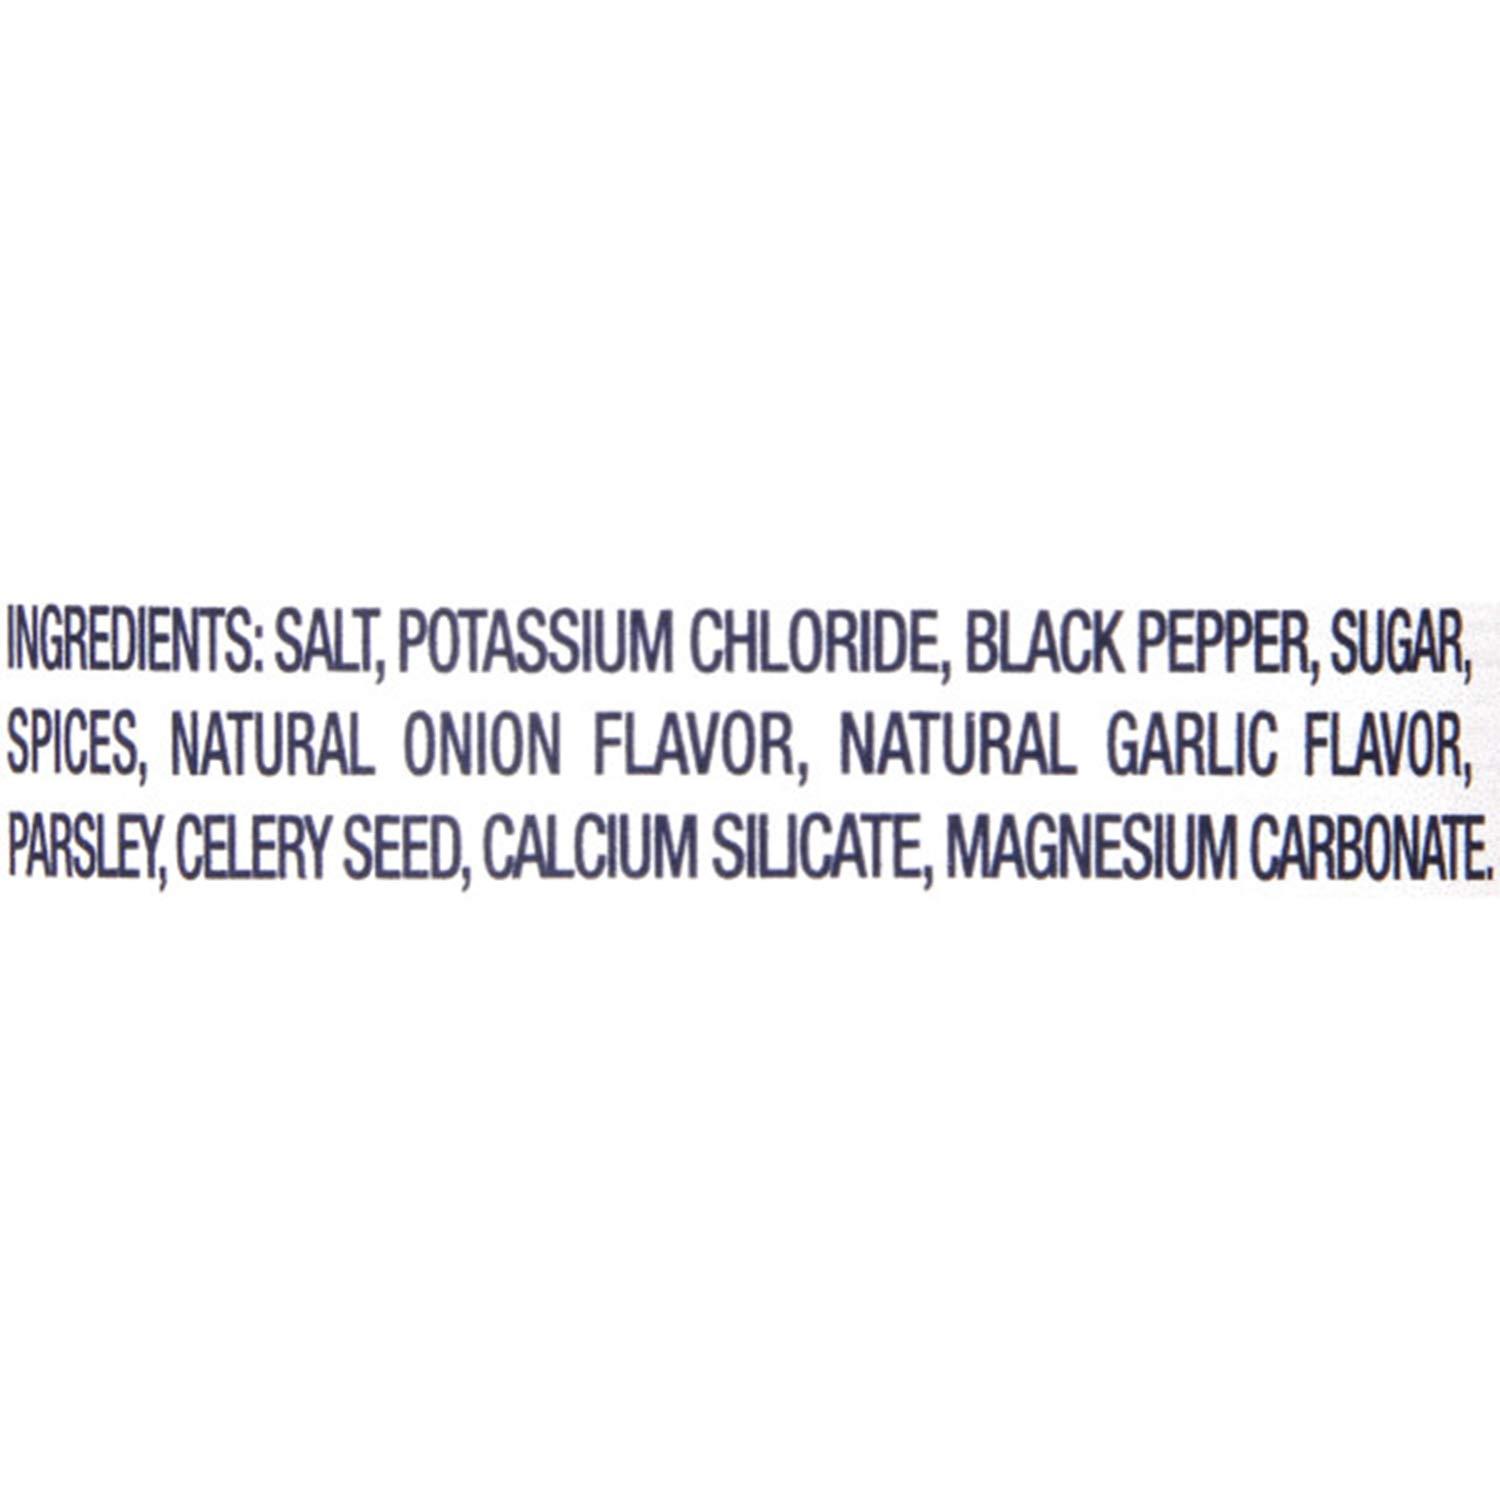 Morton Salt Nature's Seasons Seasoning Blend - Savory, 7.5 oz Canister